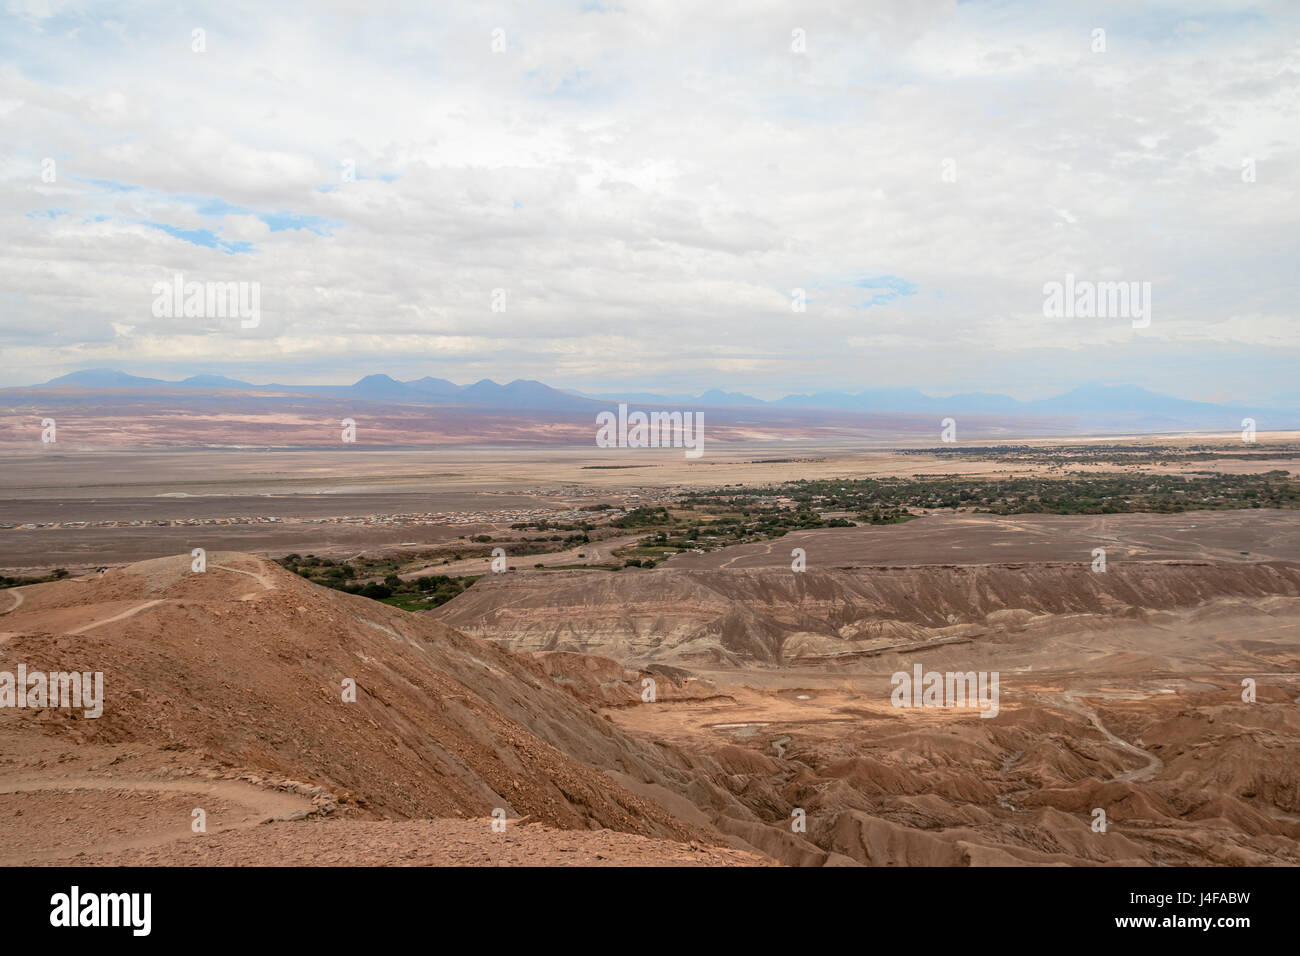 Luftaufnahme von San Pedro de Atacama Tal aus Pukara de Quitor Ruinen - Atacama-Wüste, Chile Stockfoto